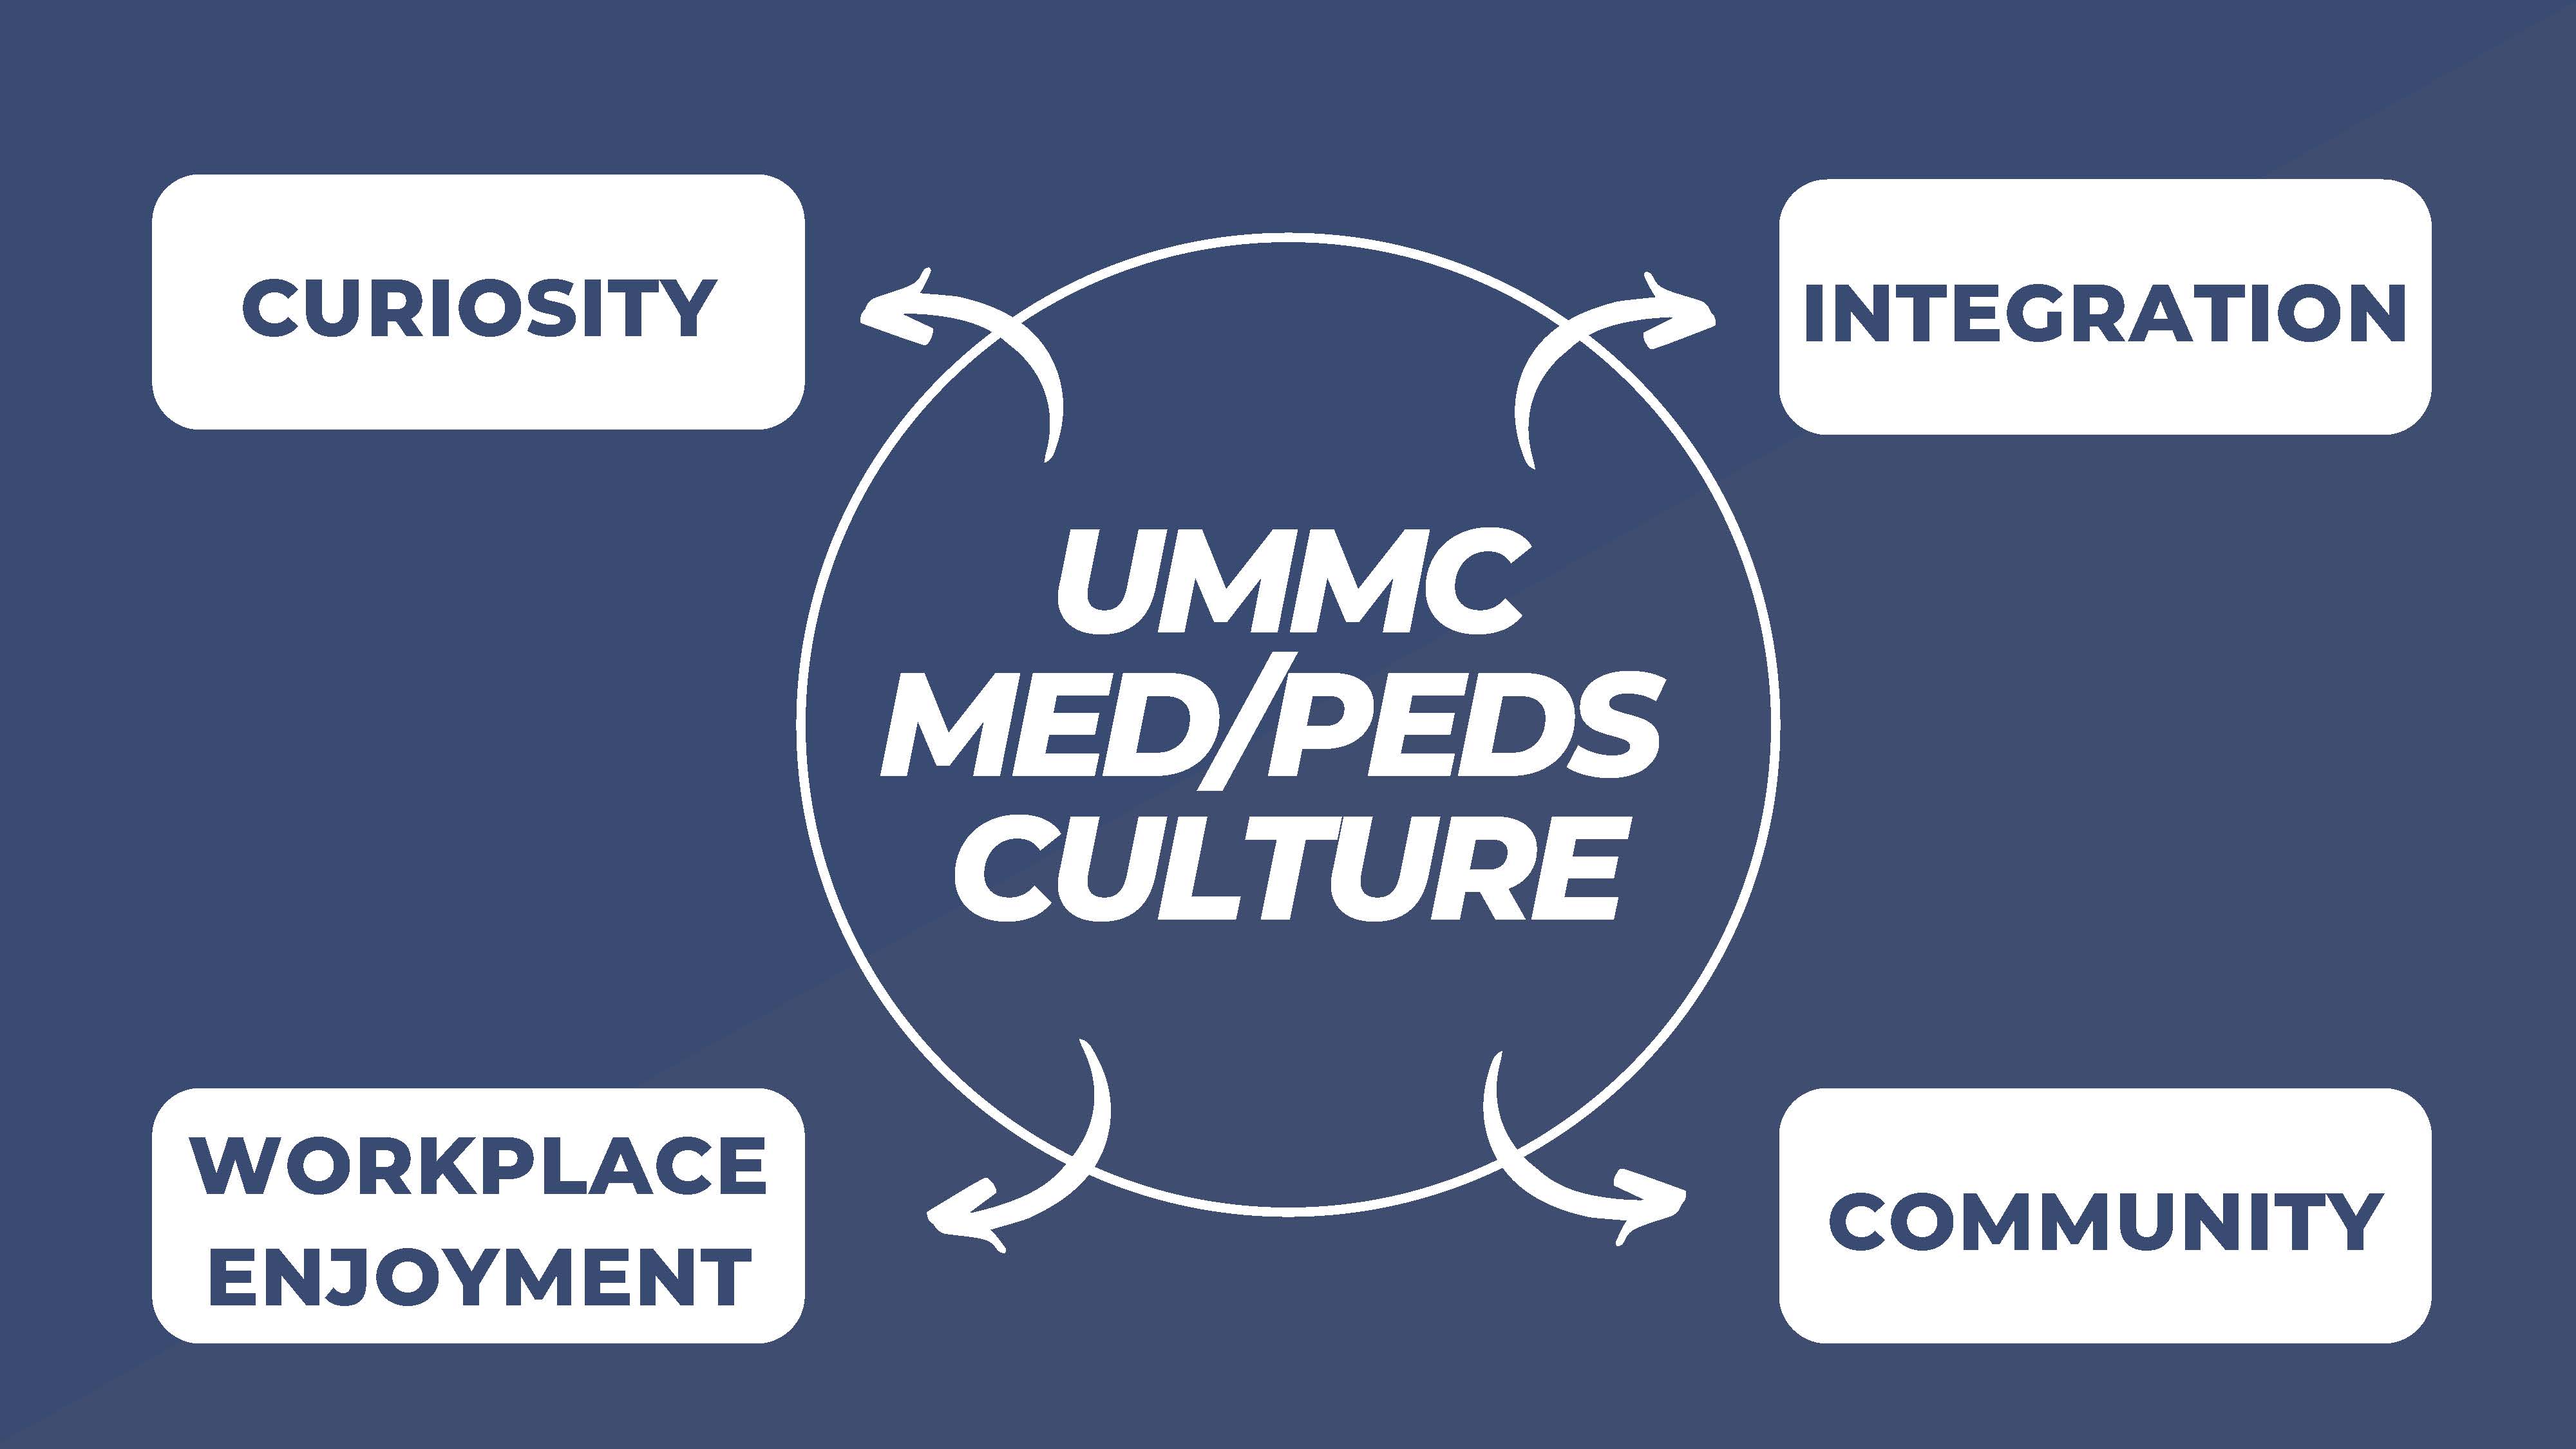 UMMC Med/Peds Culture: Curiosity, Integration, Workplace Enjoyment, and Community.